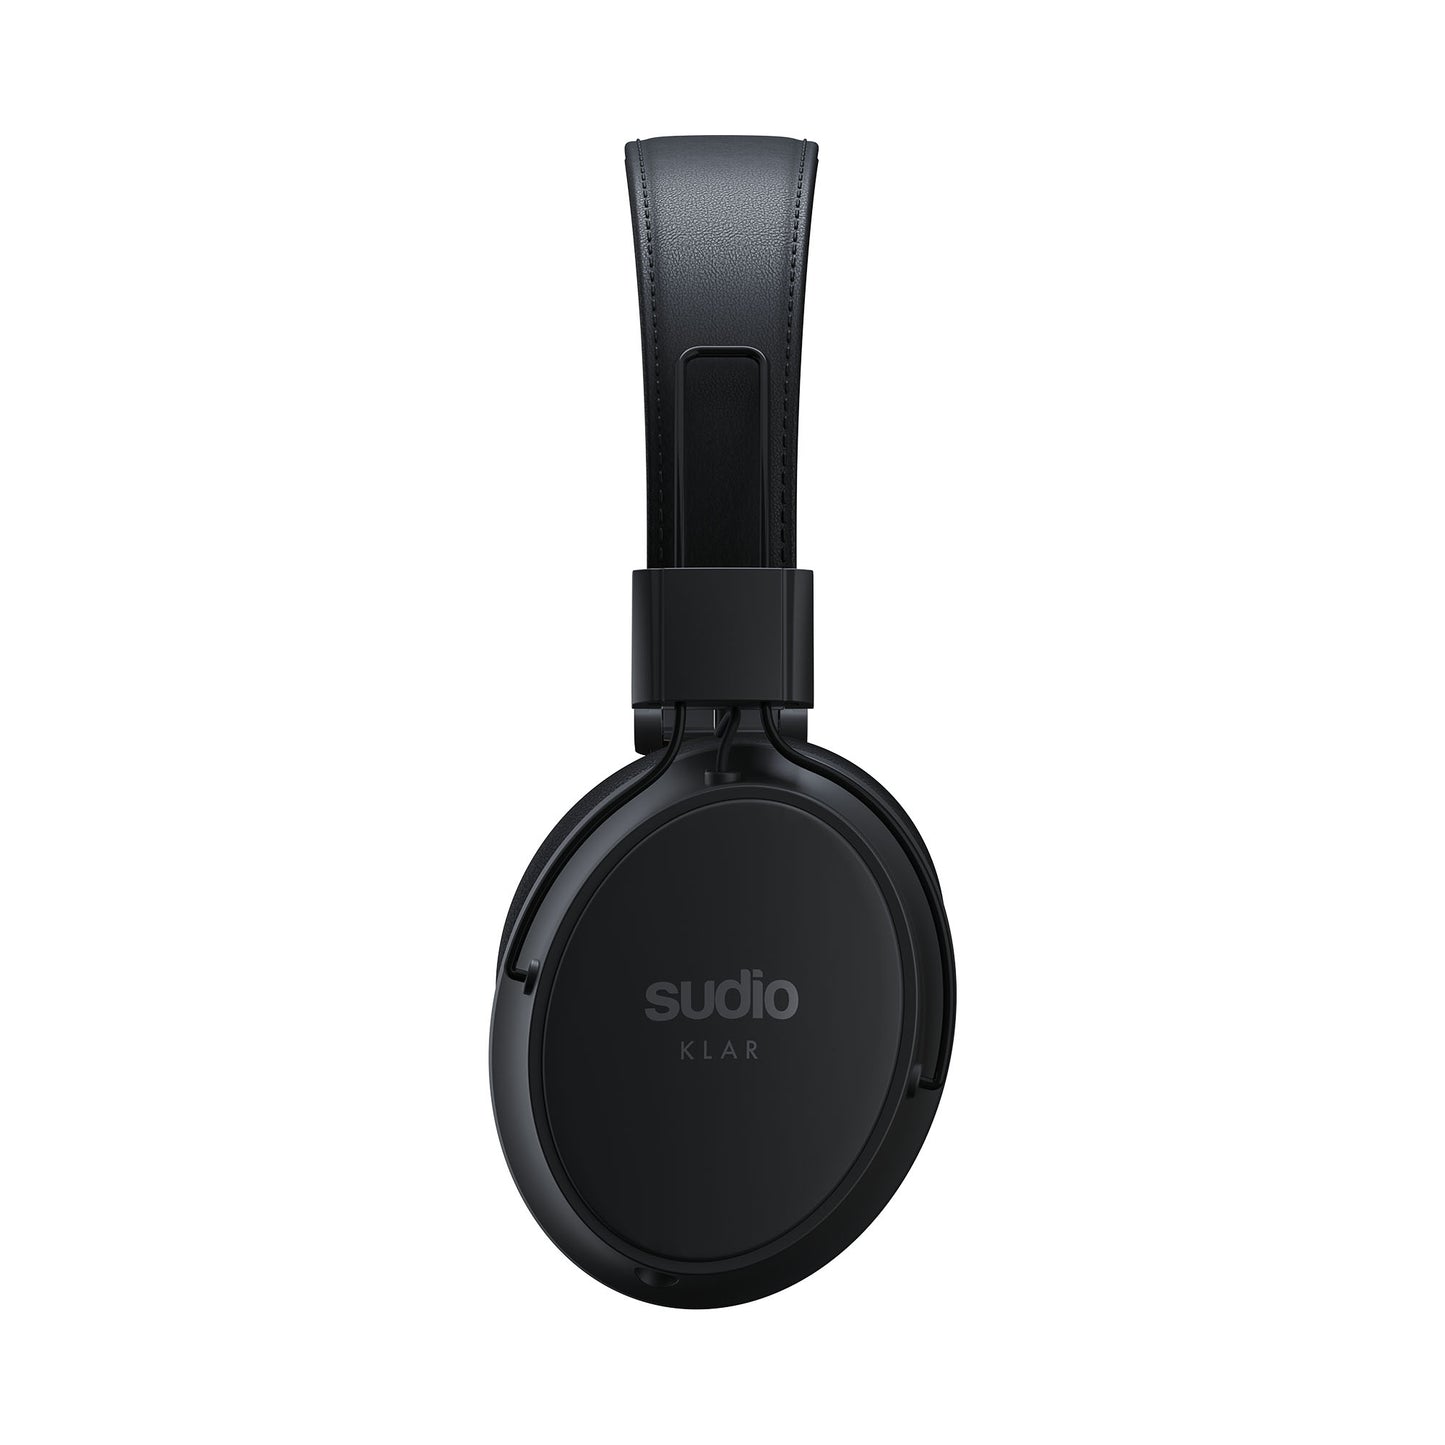 SUDIO Klar Wireless Noise Cancelling Around-Ear Headphones - Black